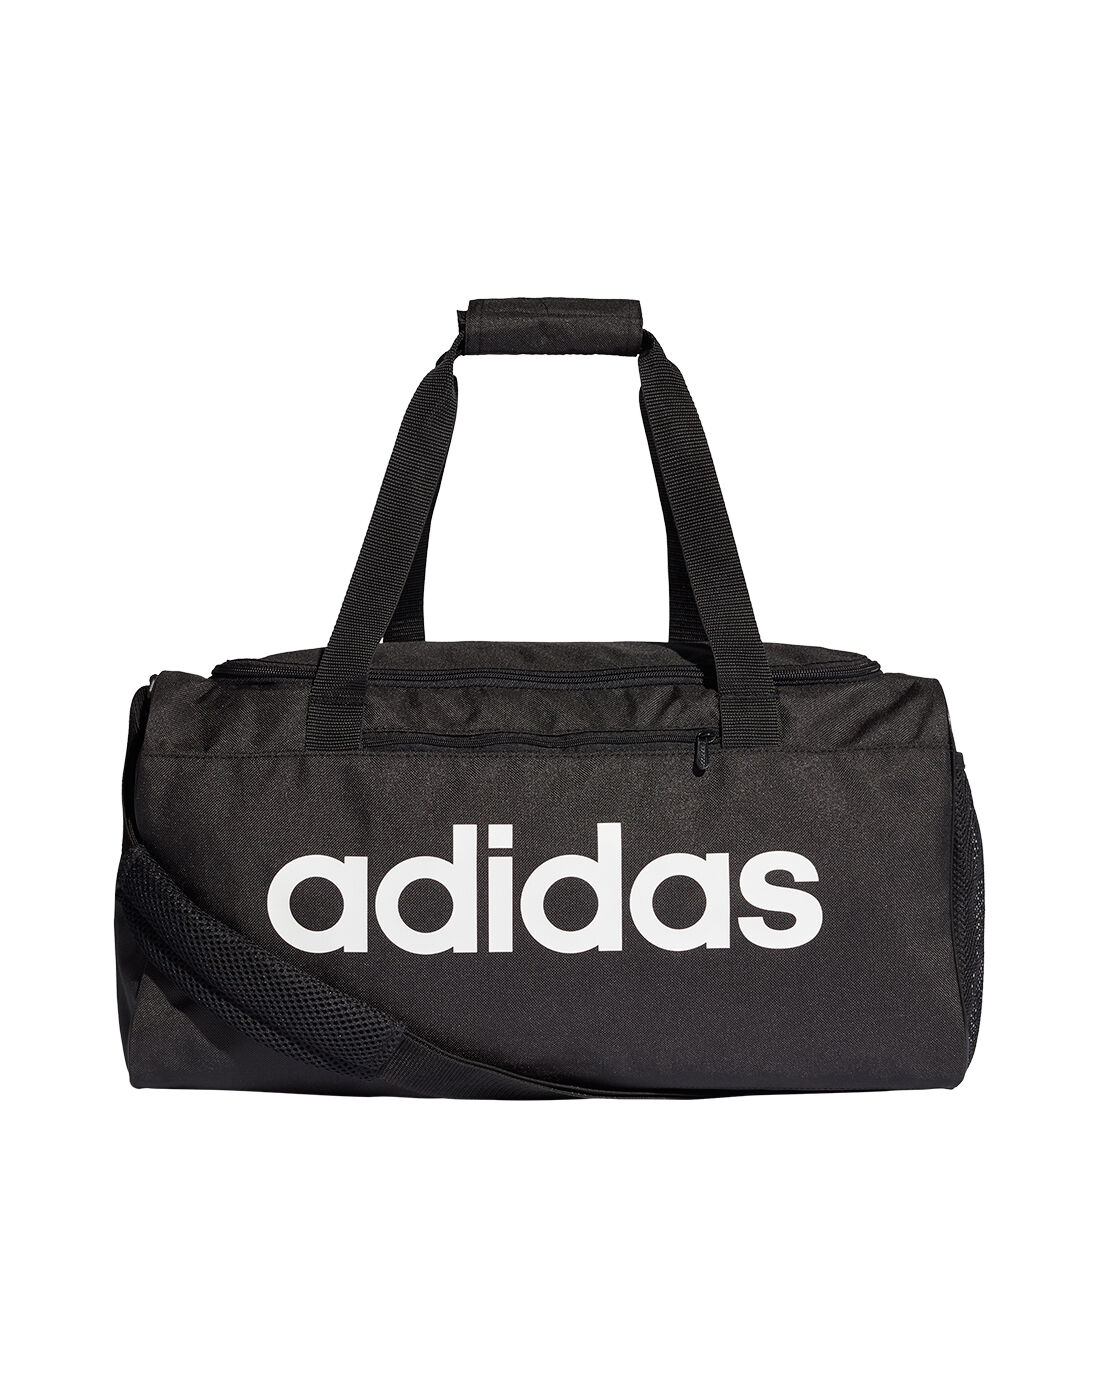 adidas linear core duffel bag